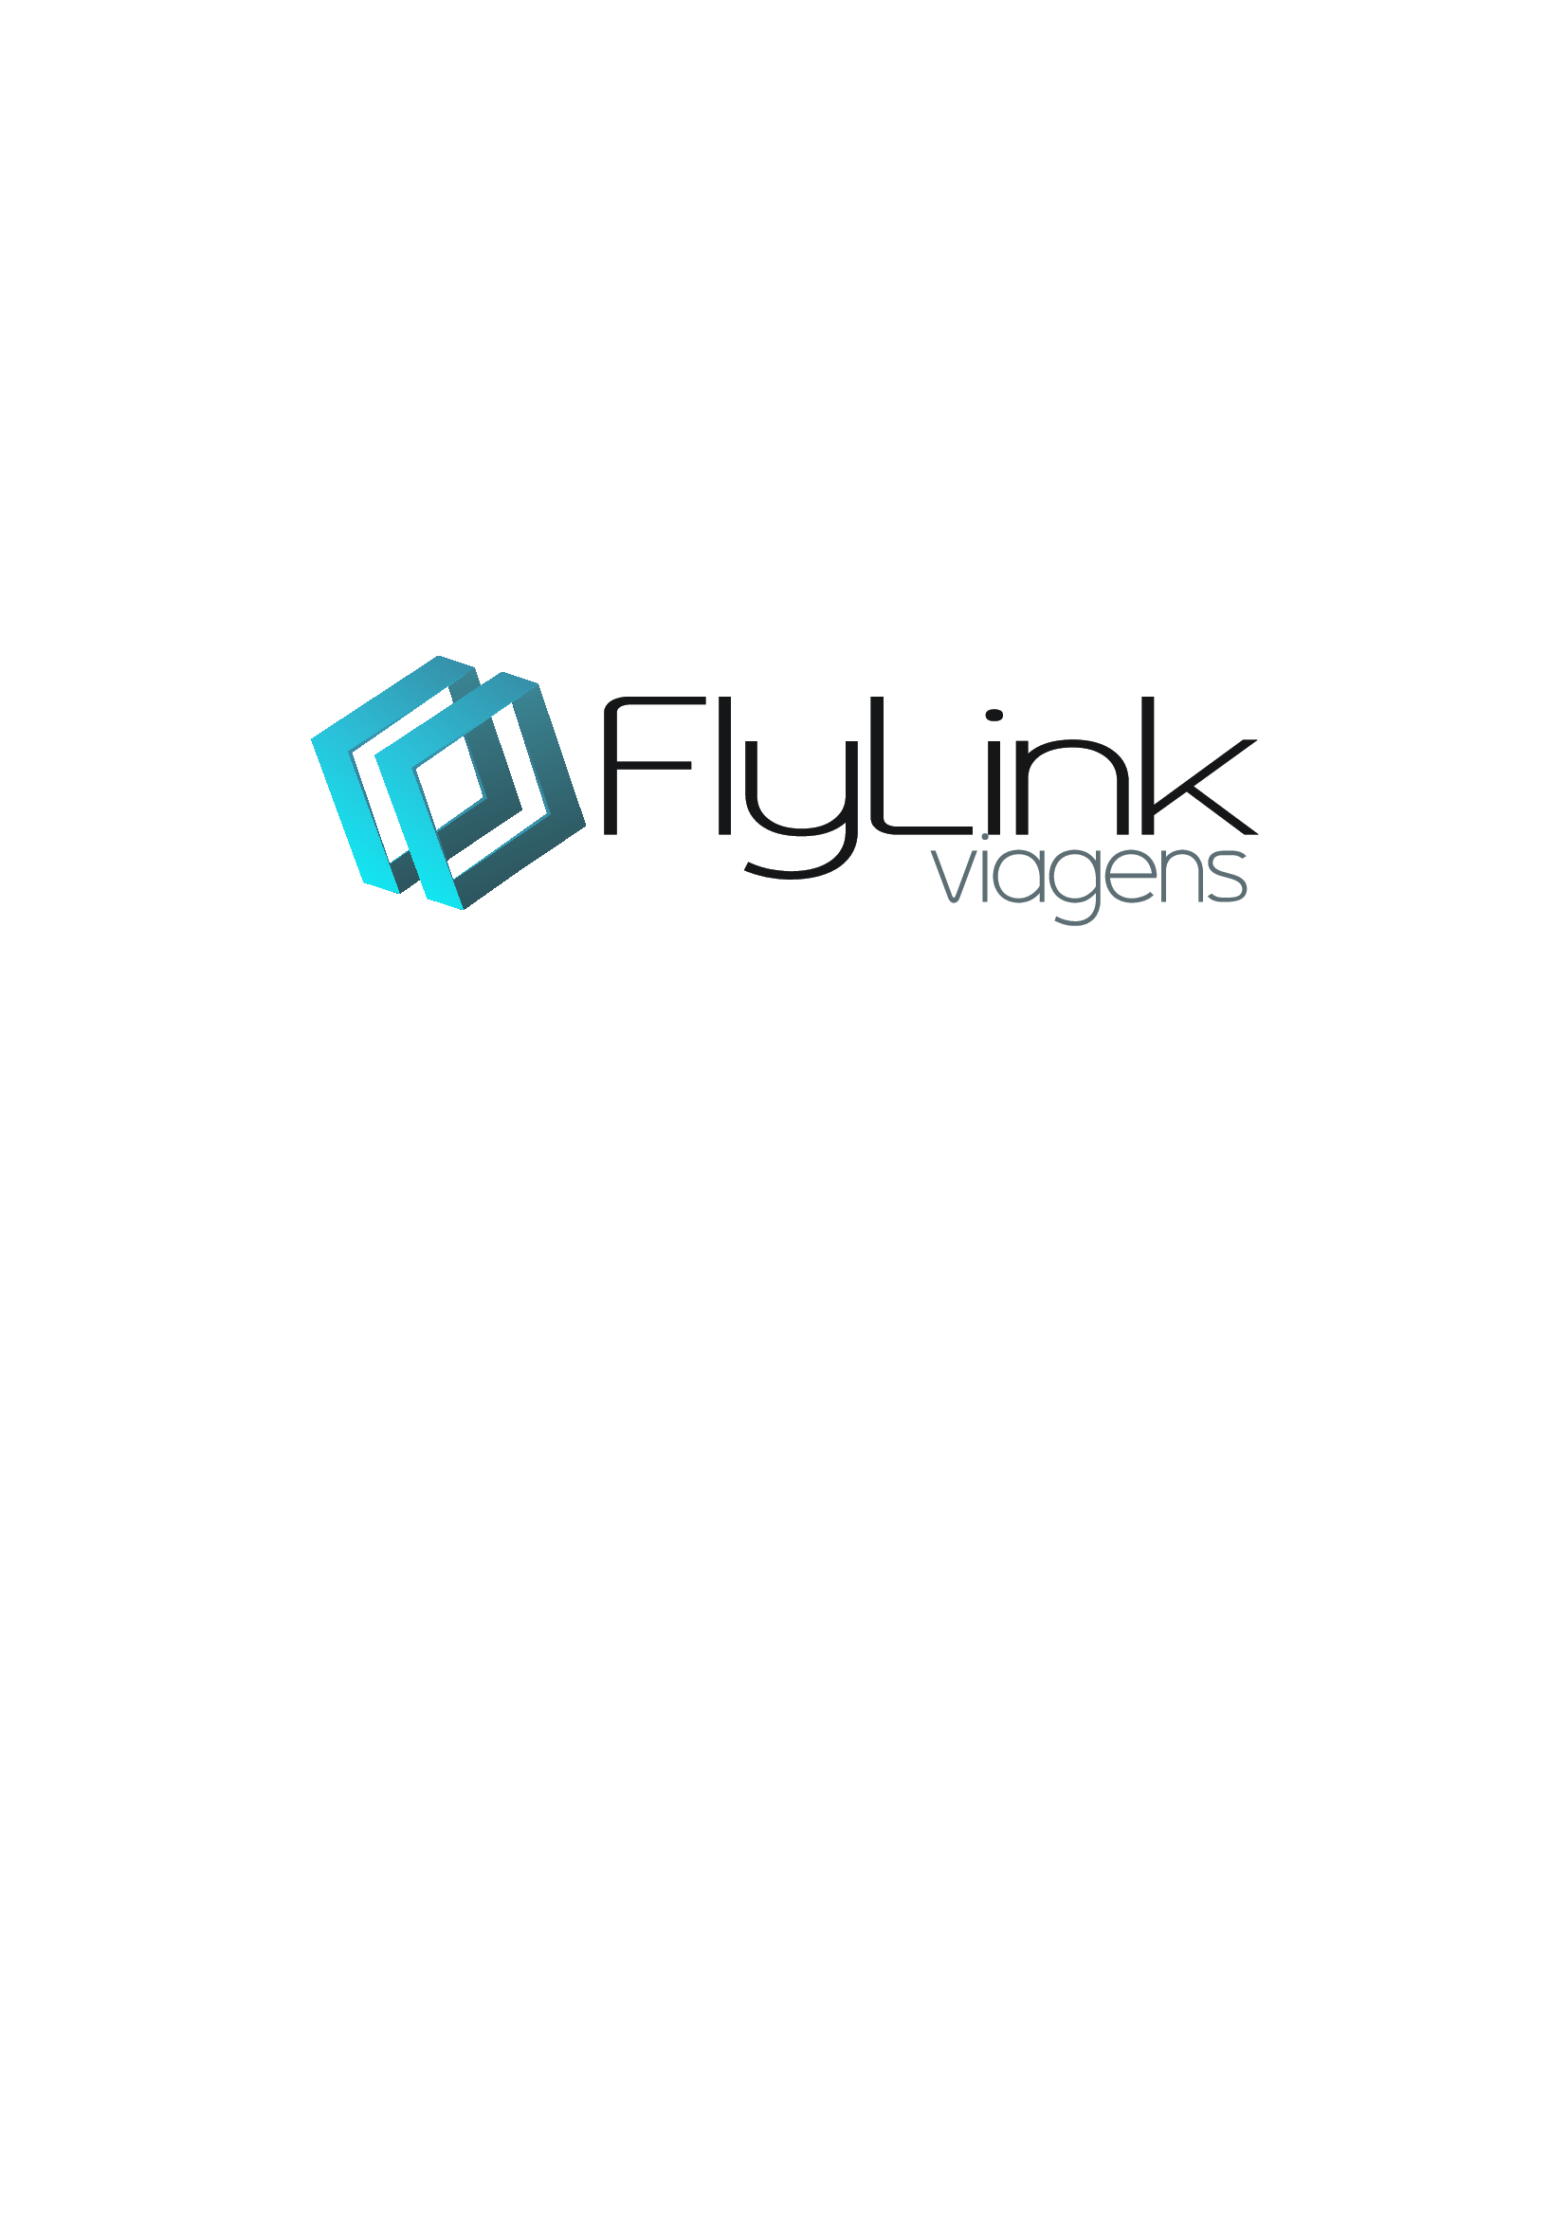 flylink travel